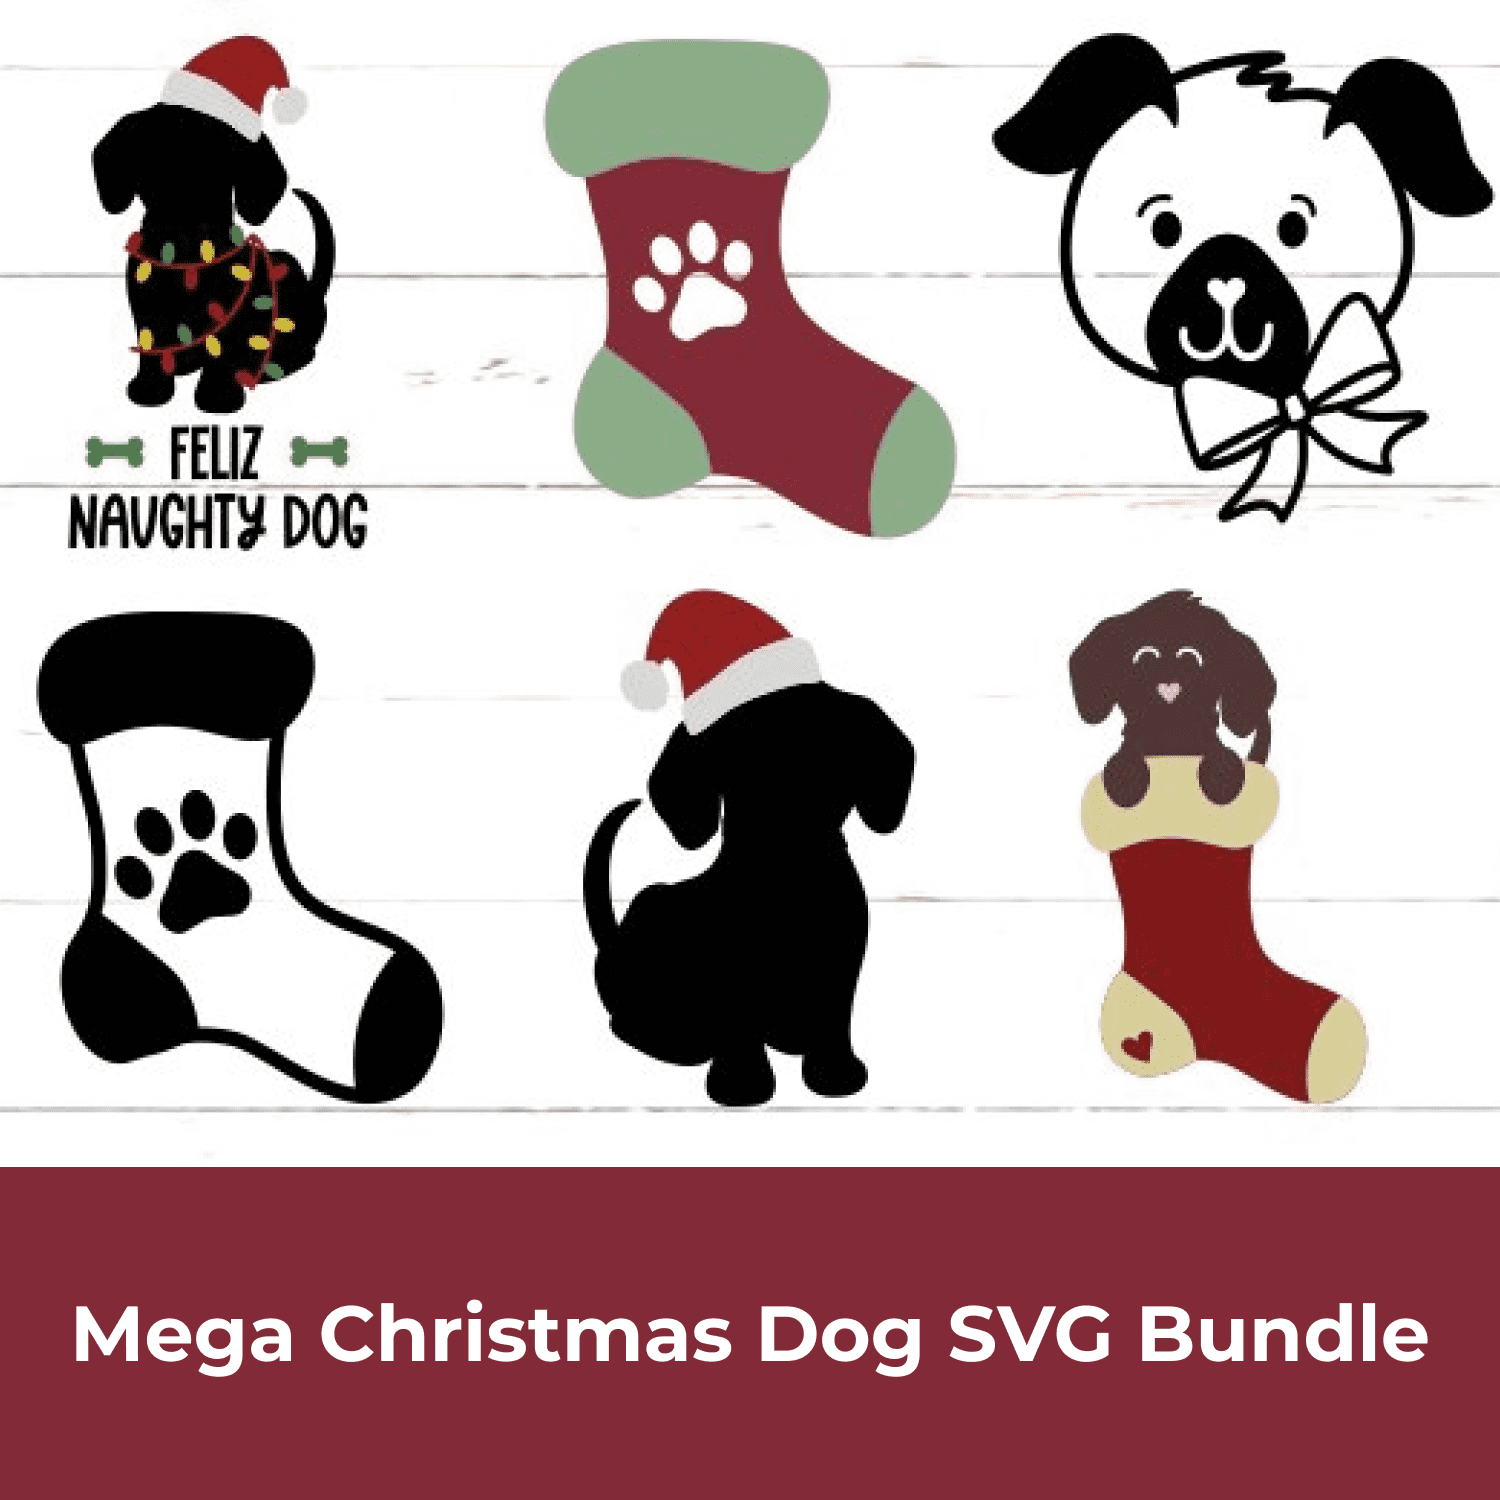 Mega Christmas Dog SVG Bundle cover image.